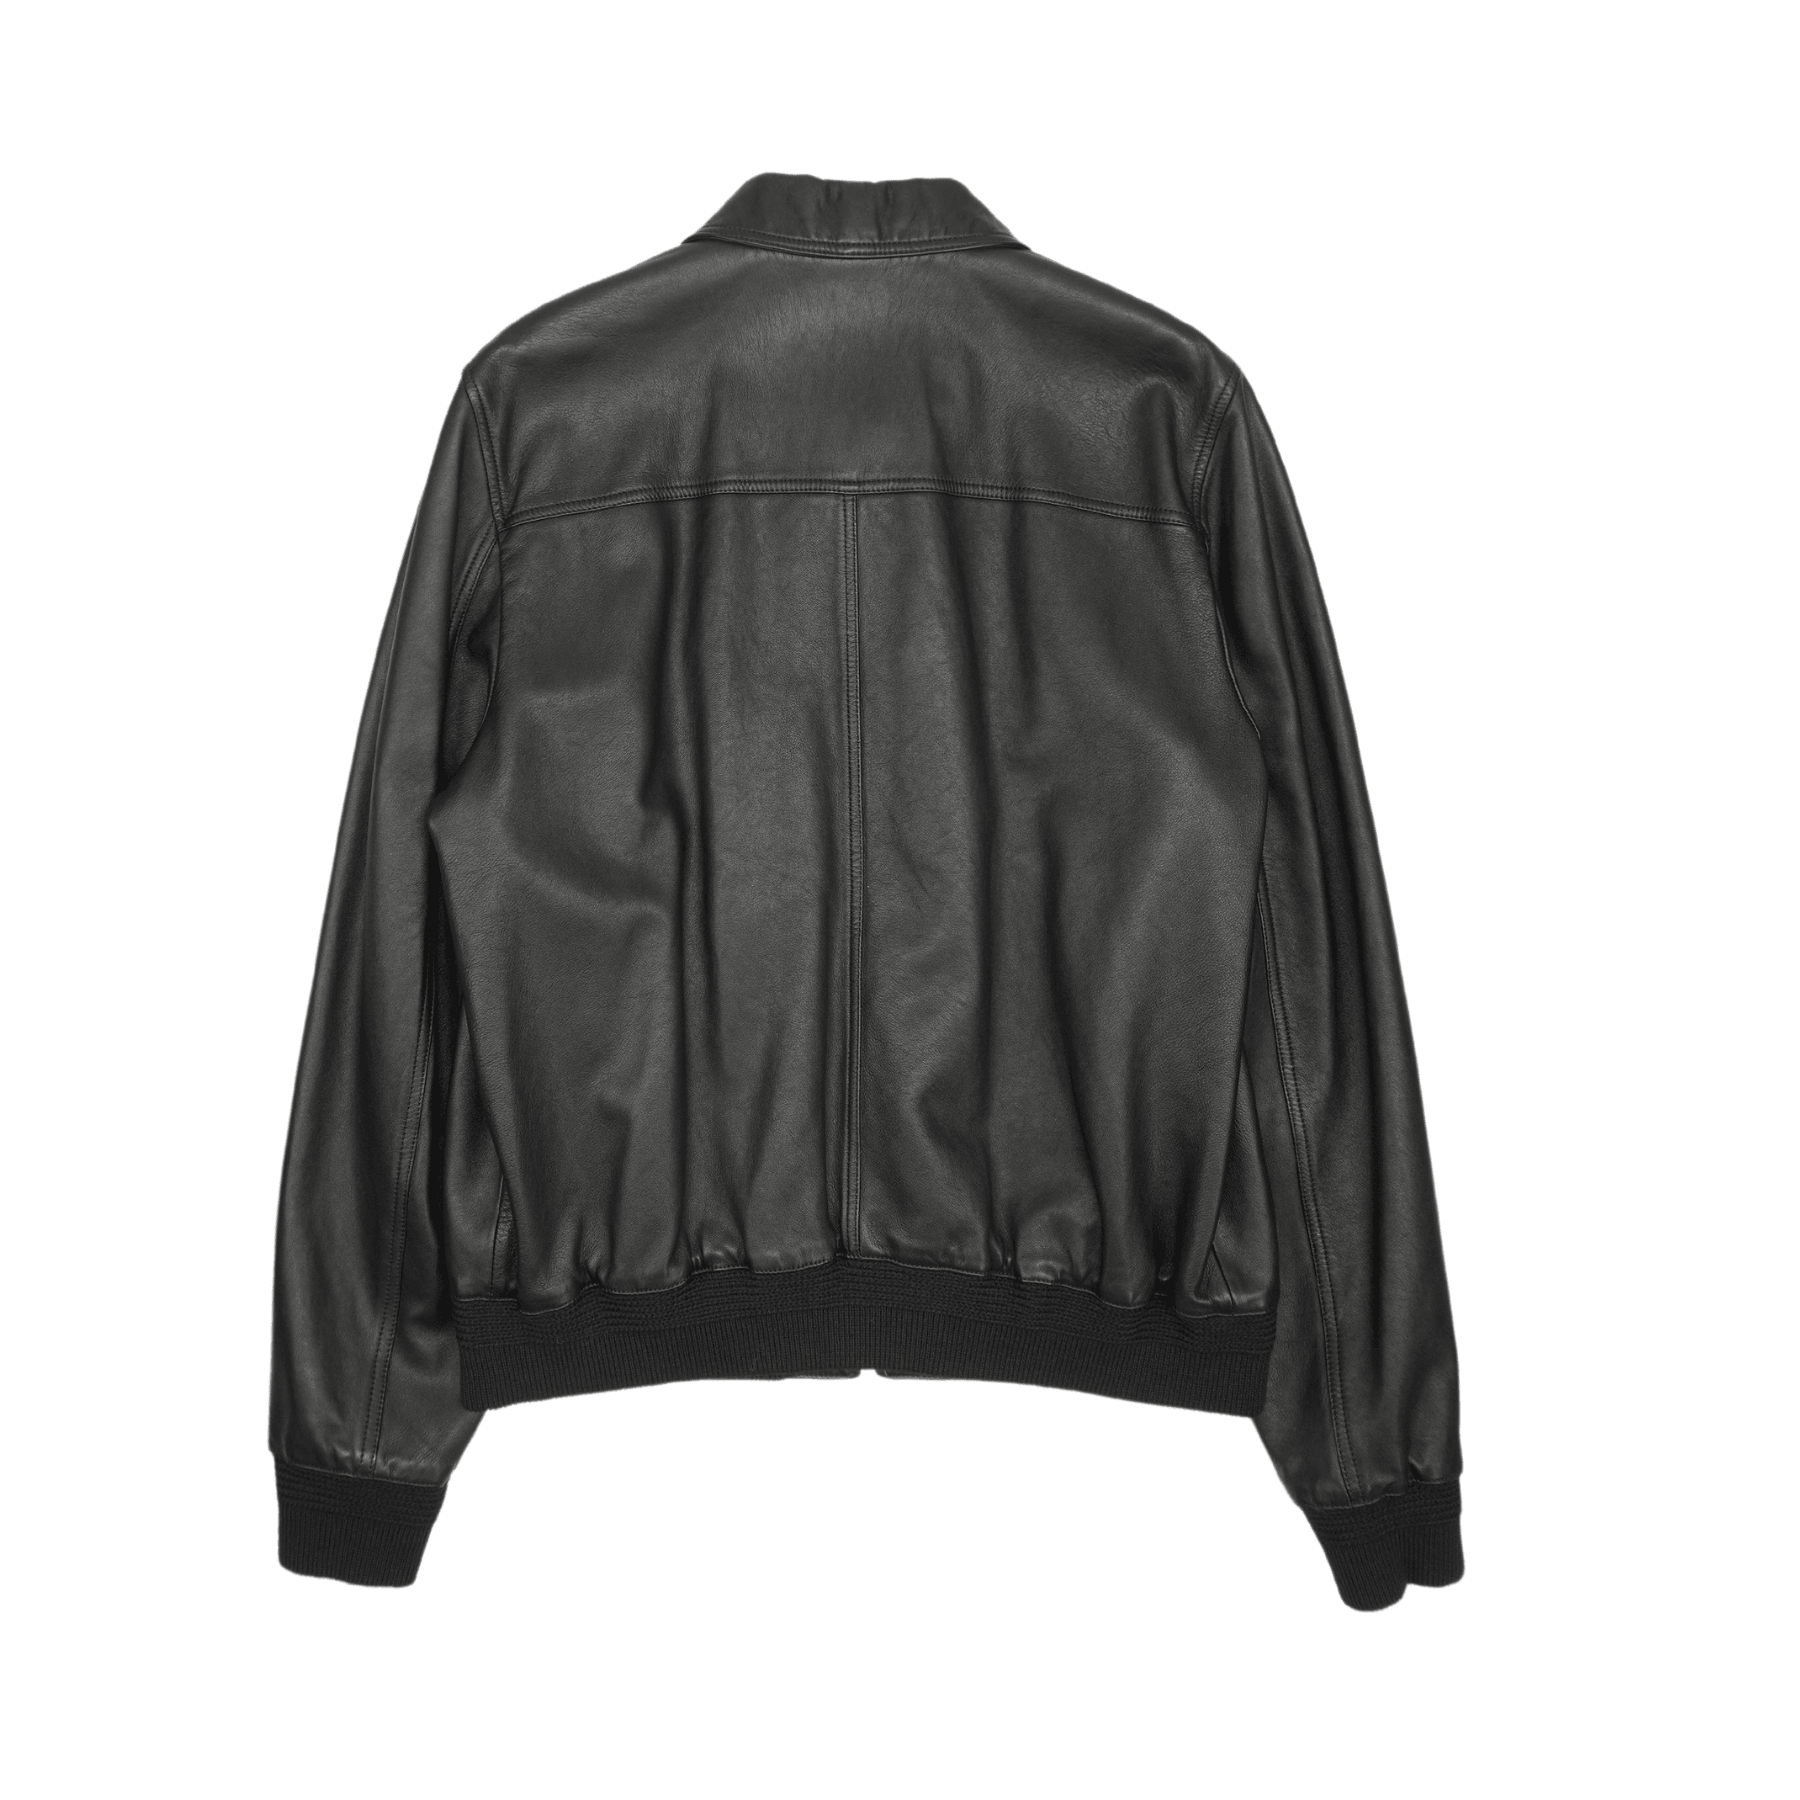 Saint Laurent Leather Jacket - Men's 52 - Fashionably Yours